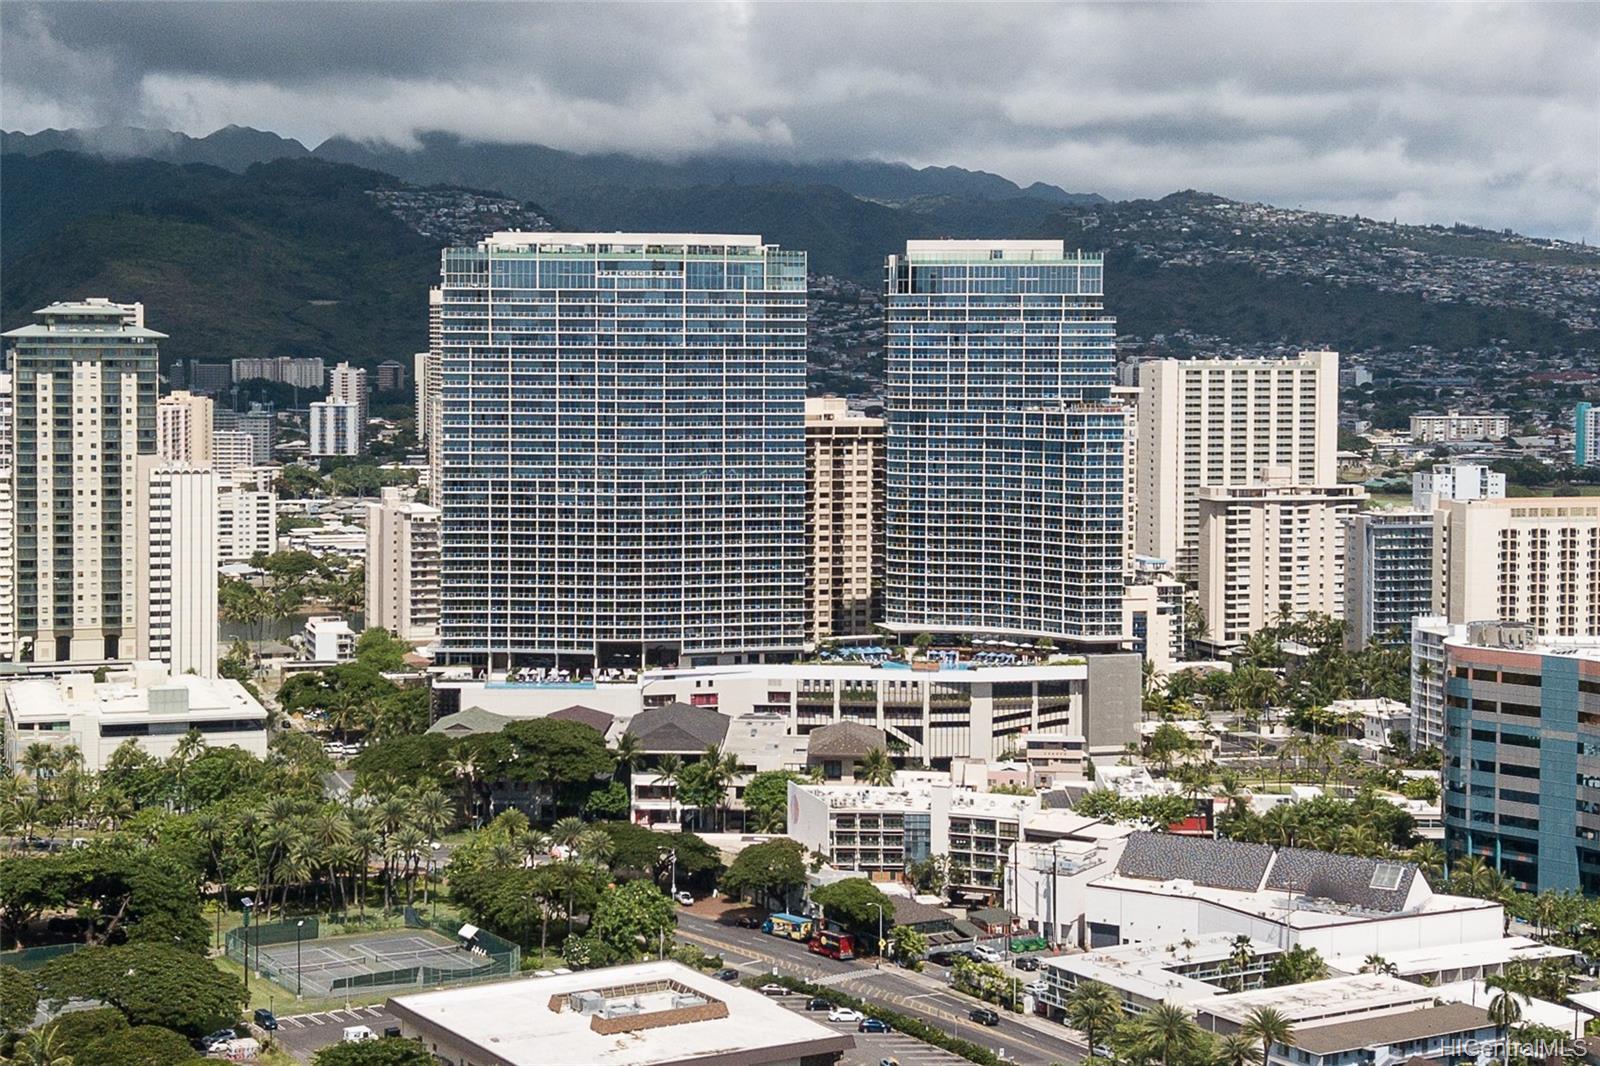 The Ritz-Carlton Residences Twr 2 - 383 Kalaimoku 2139 Kuhio Avenue #1707, Honolulu, HI 96815